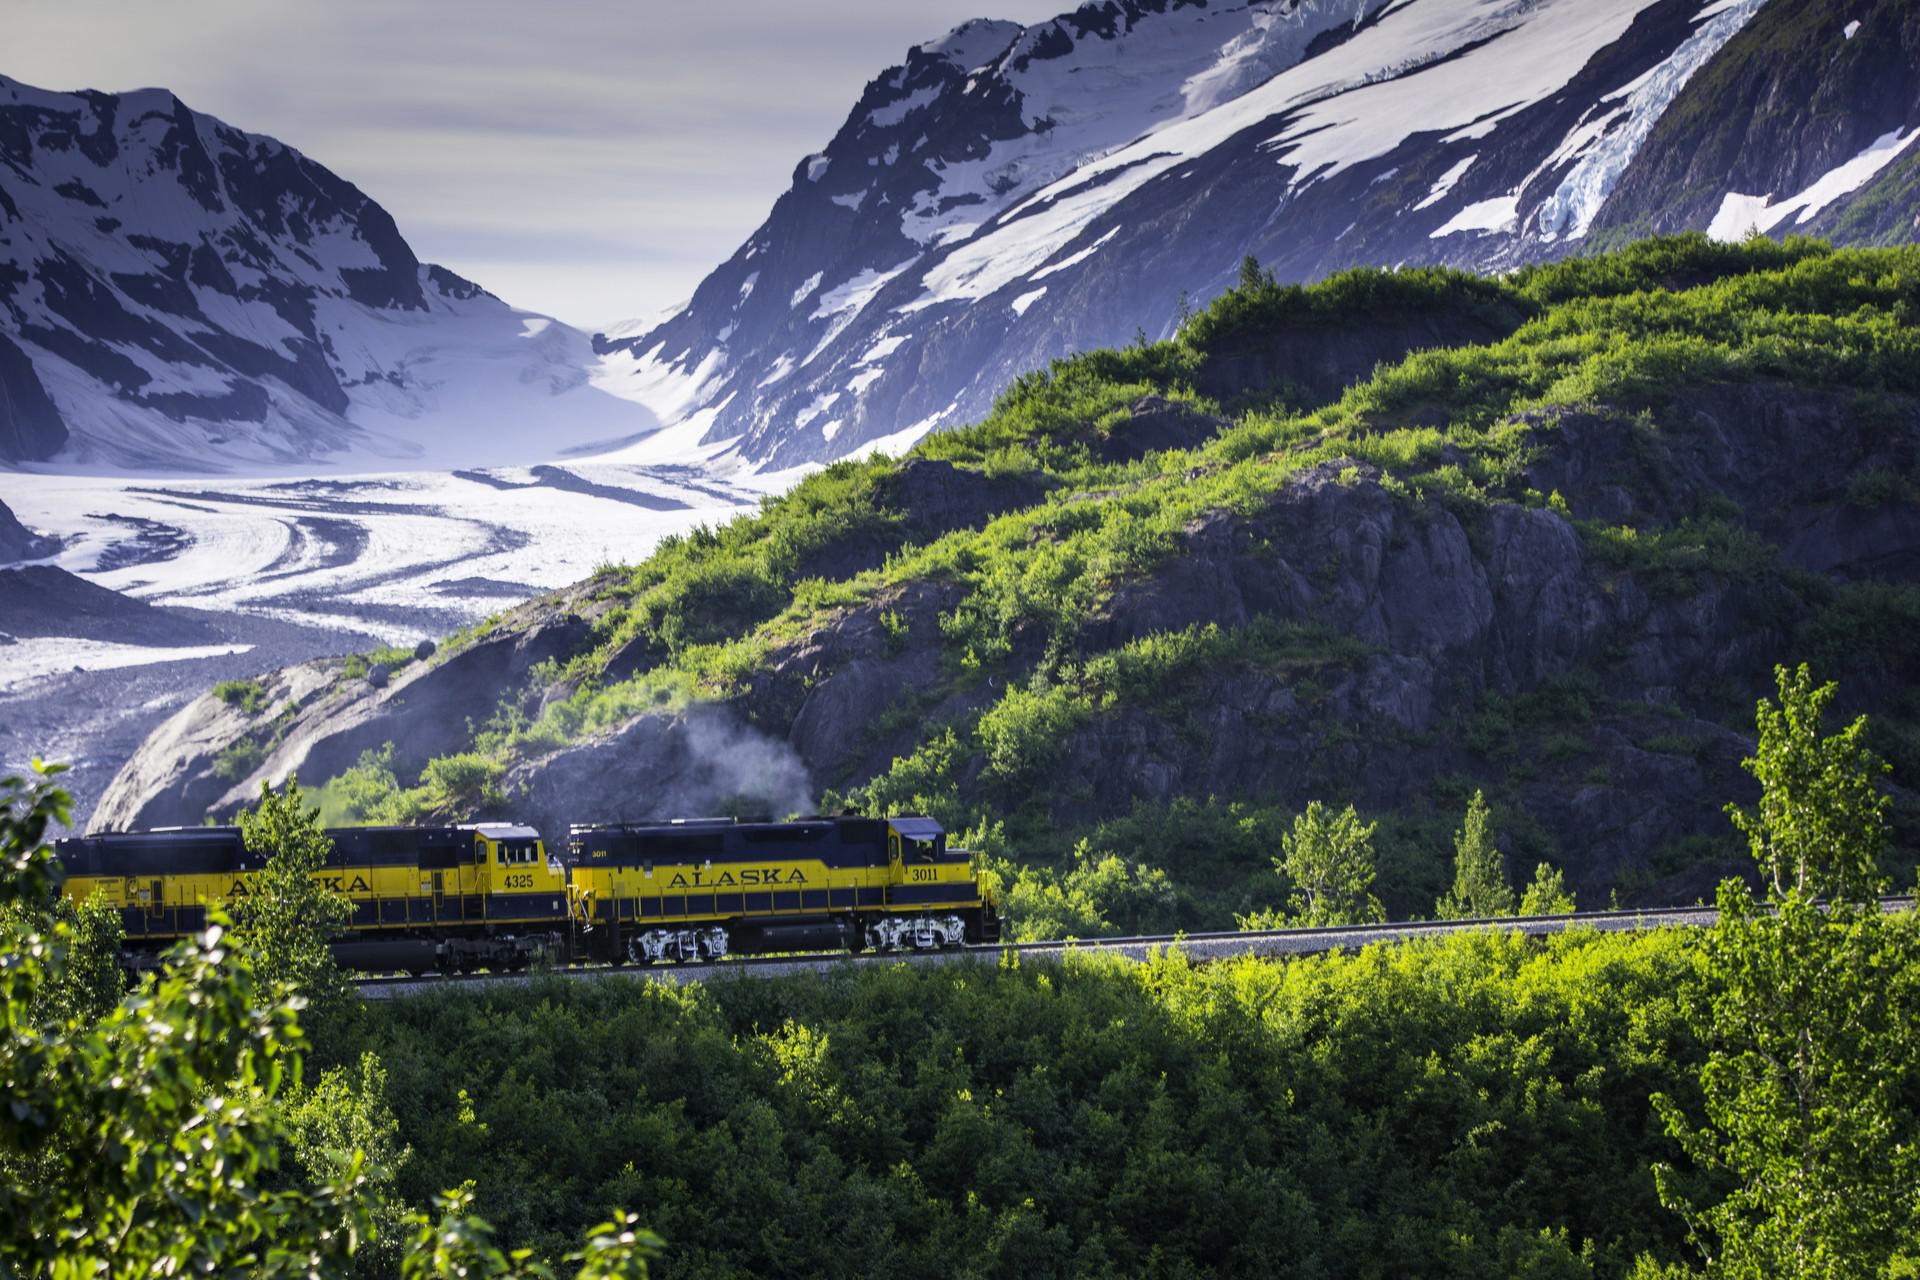 Alaska by Train